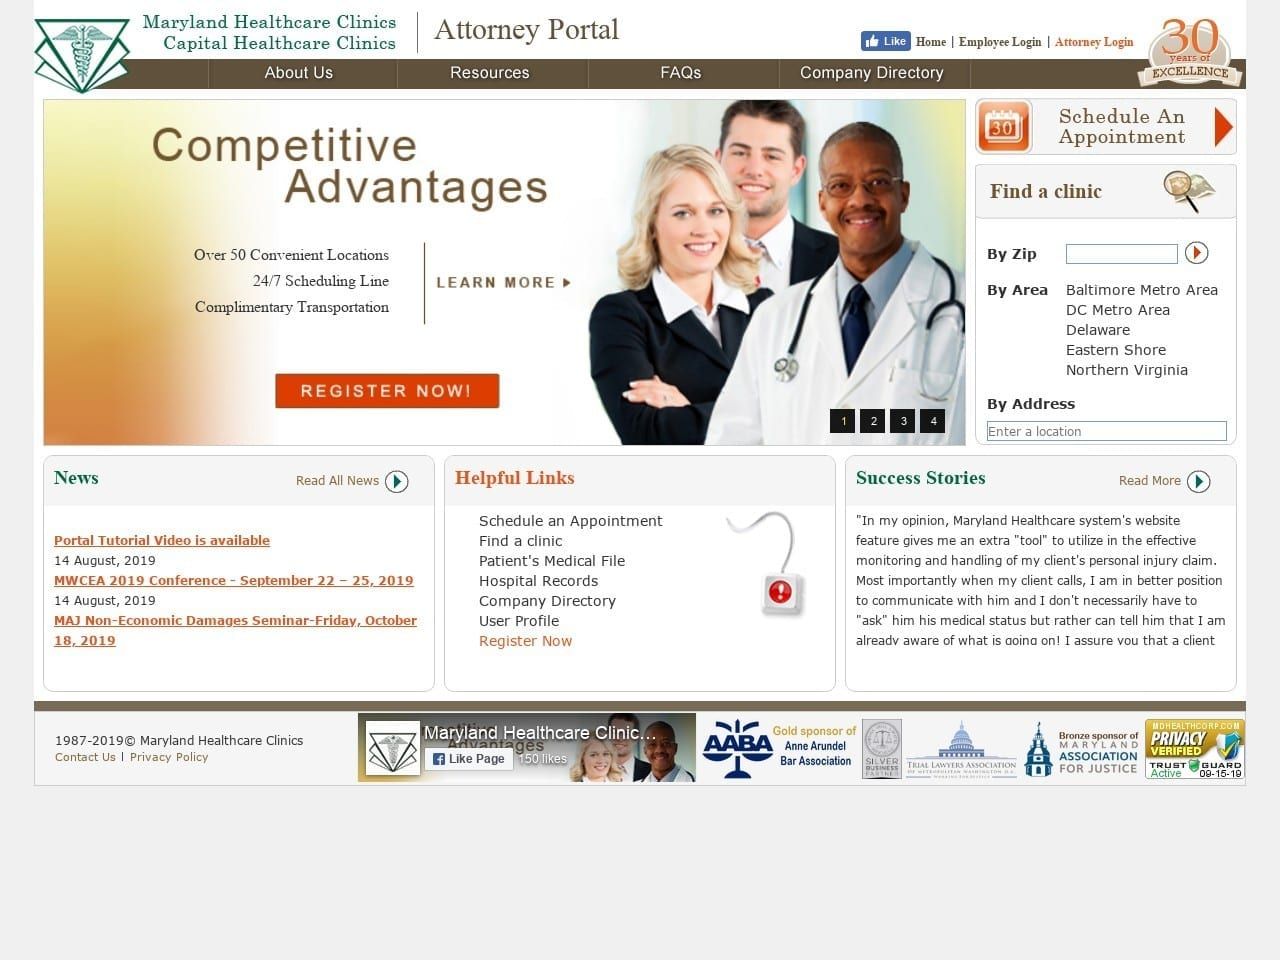 Maryland Healthcare Clinics Website Screenshot from mdhealthcorp.com